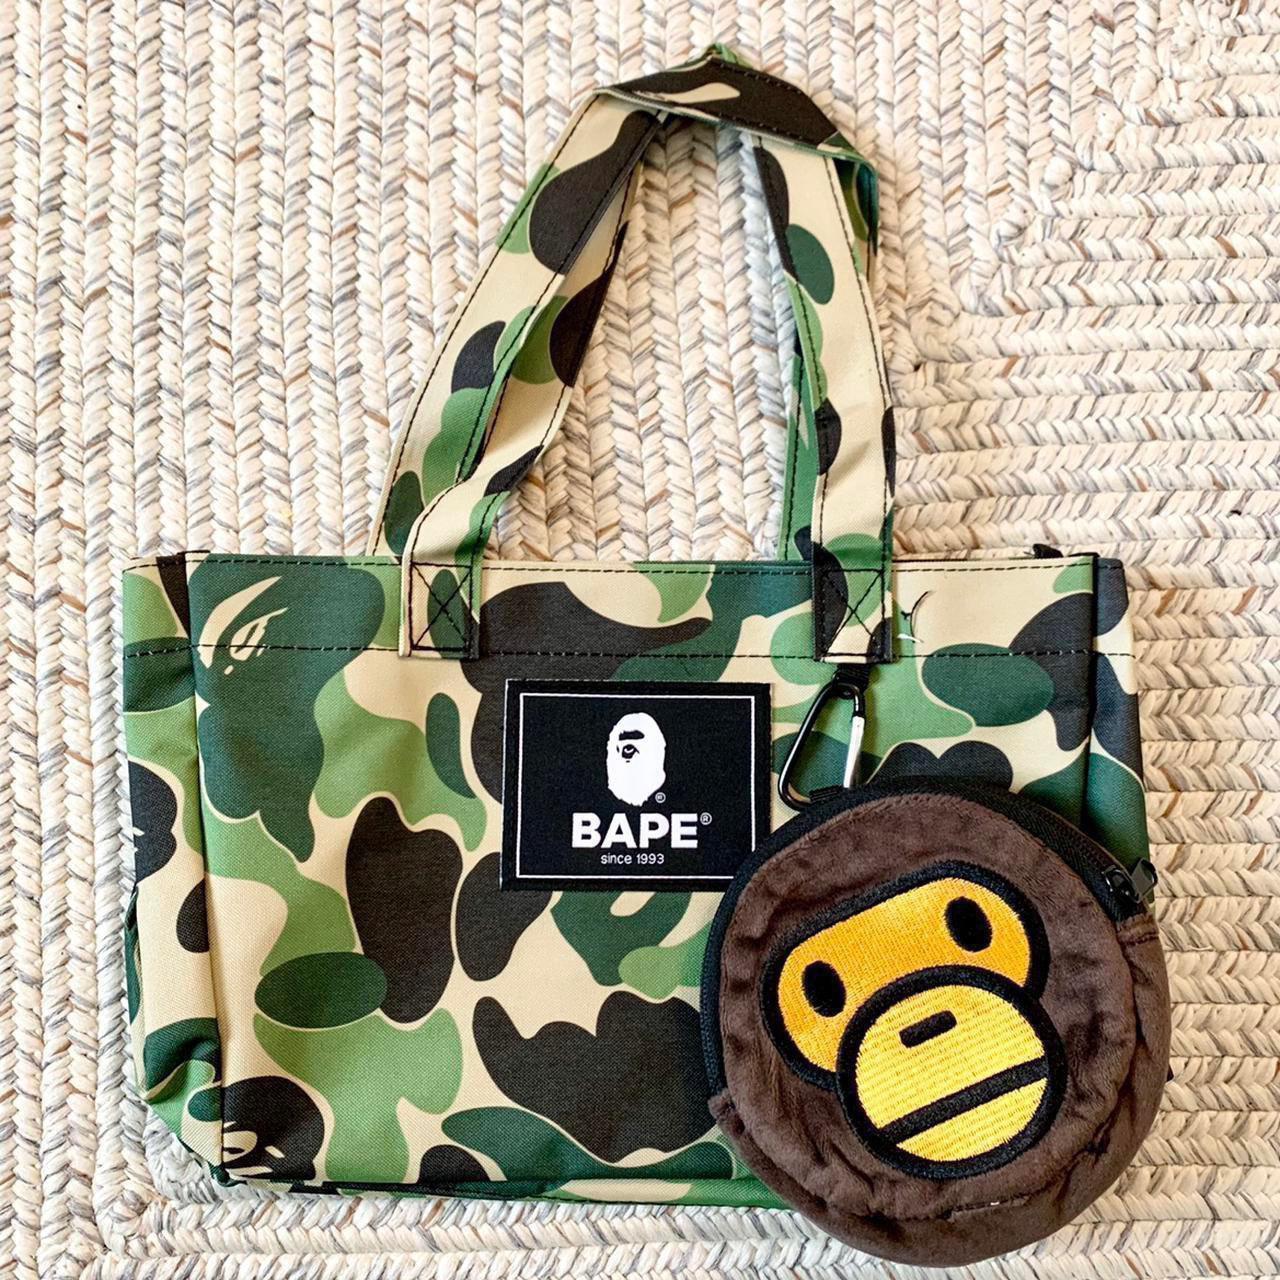 BAPE Camouflage Shoulder Bag in Green and Pink